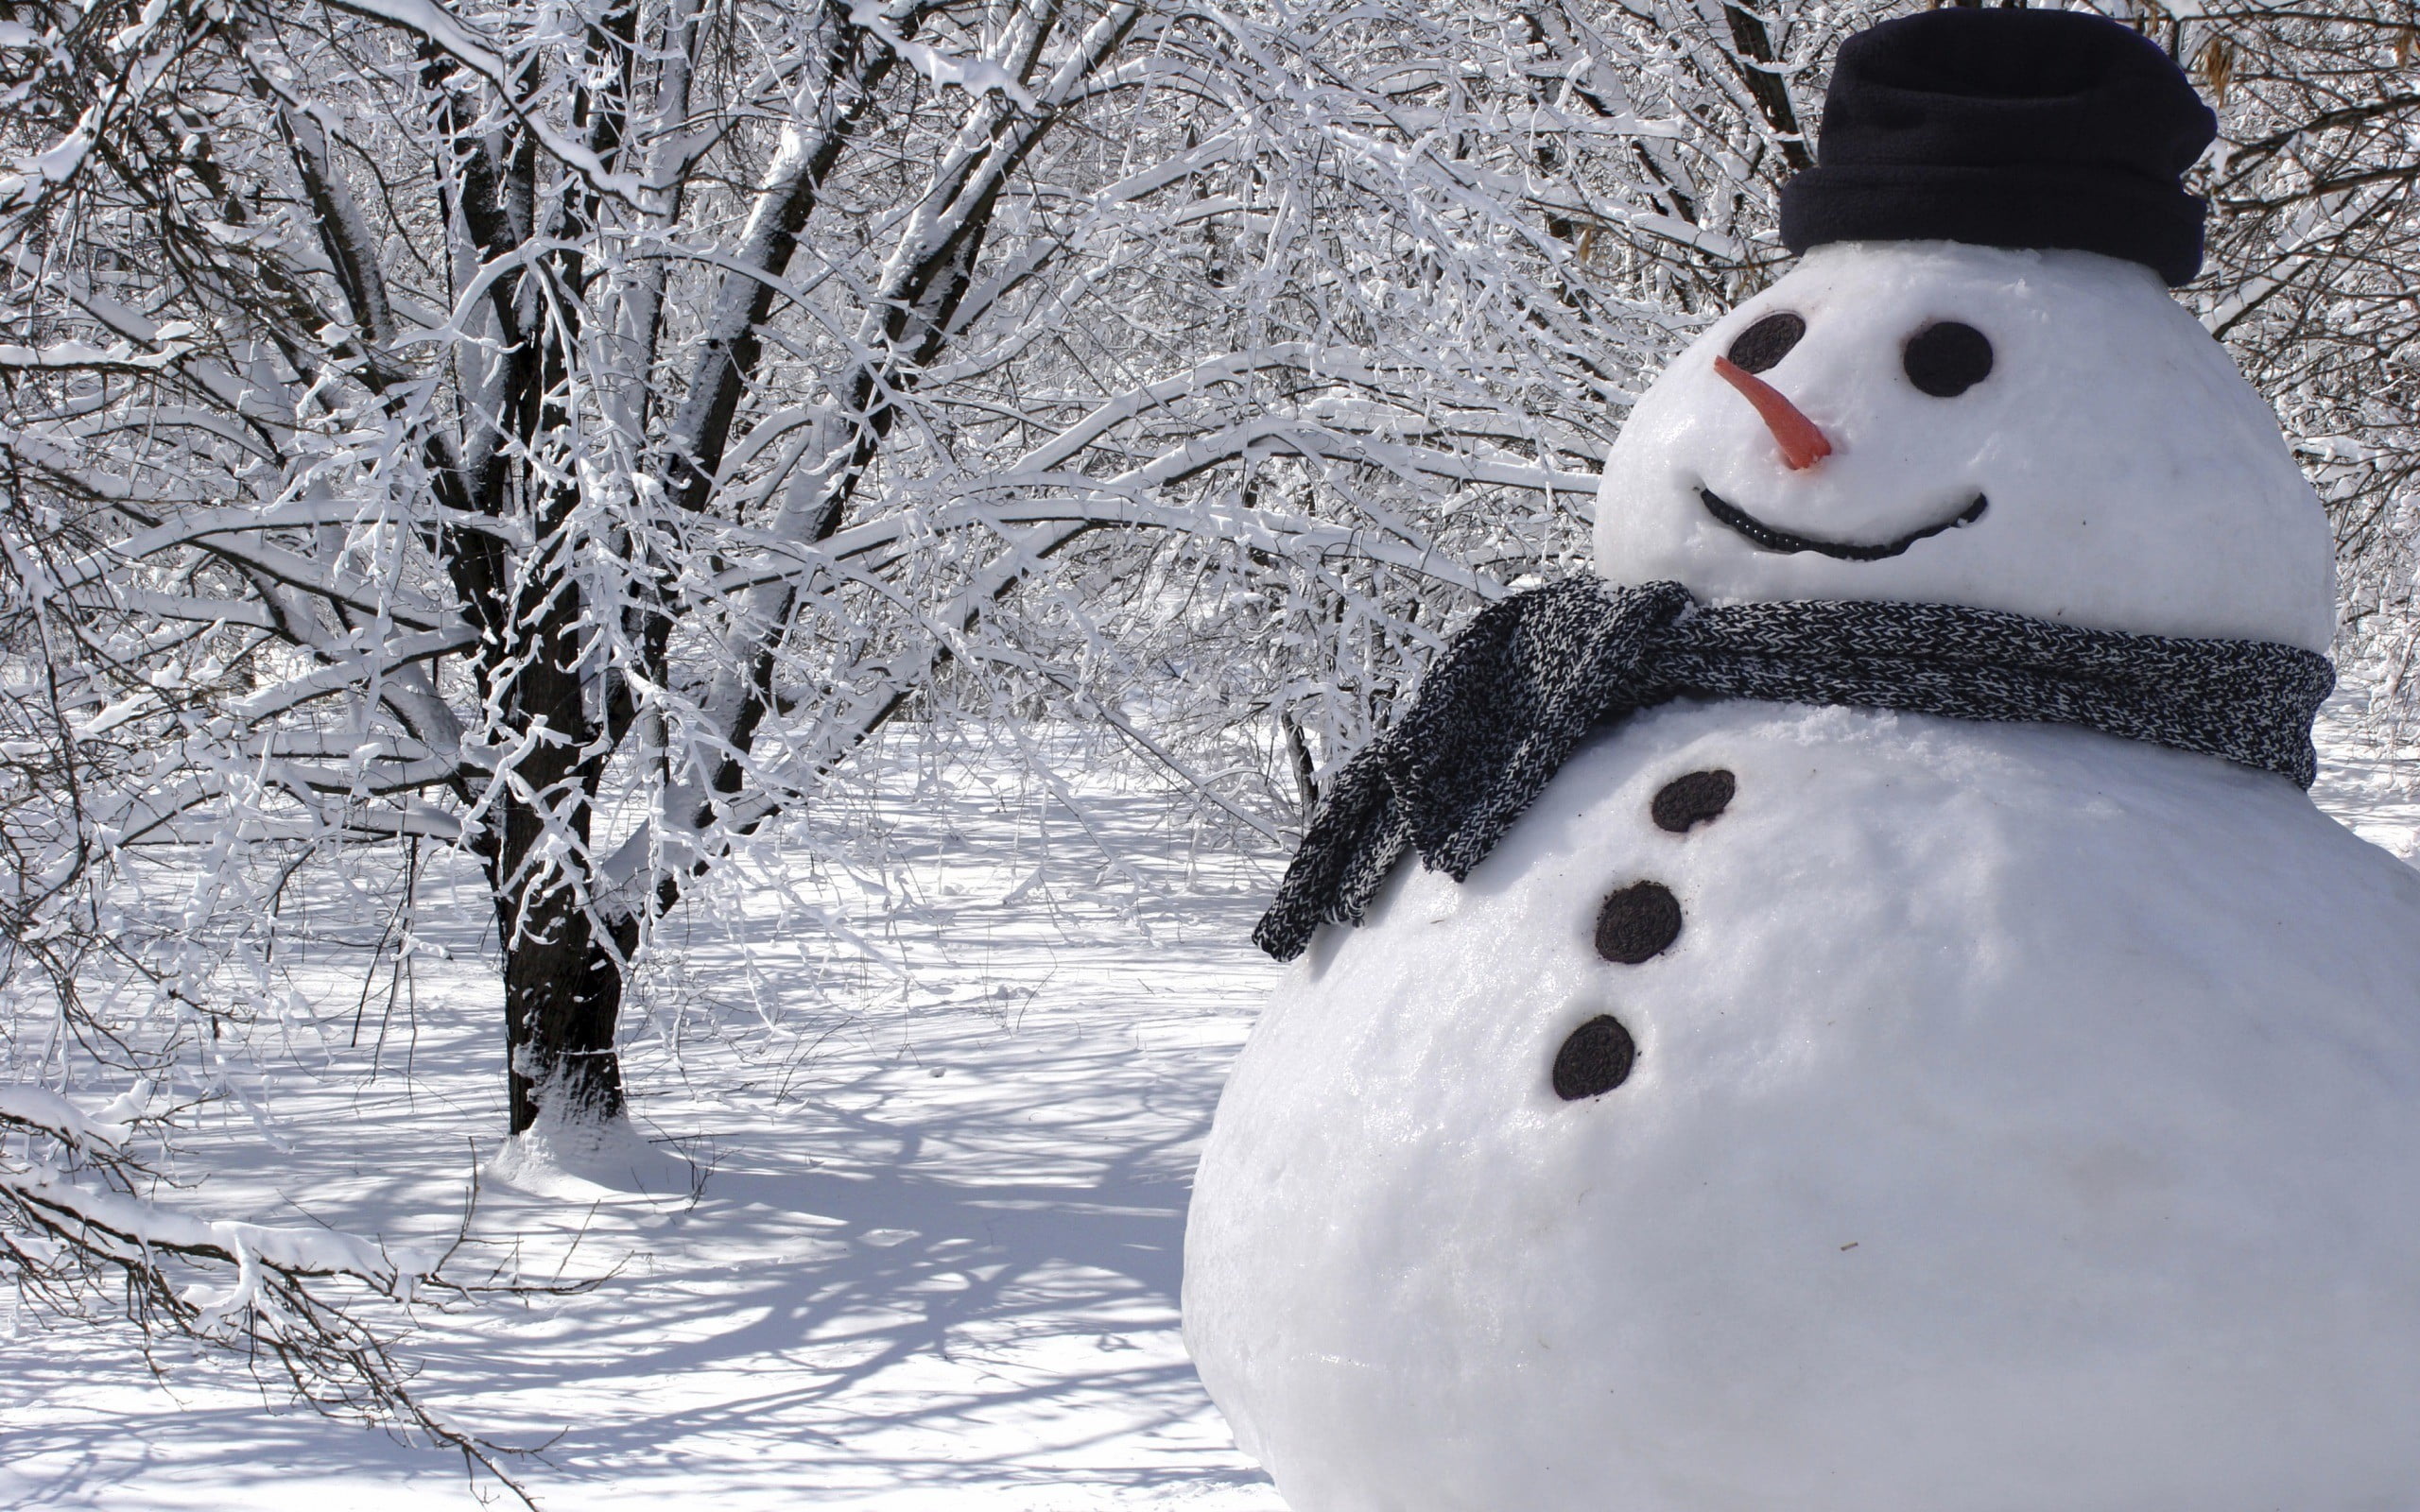 snowman, winter, white, nature, carrot, smiling, cold temperature